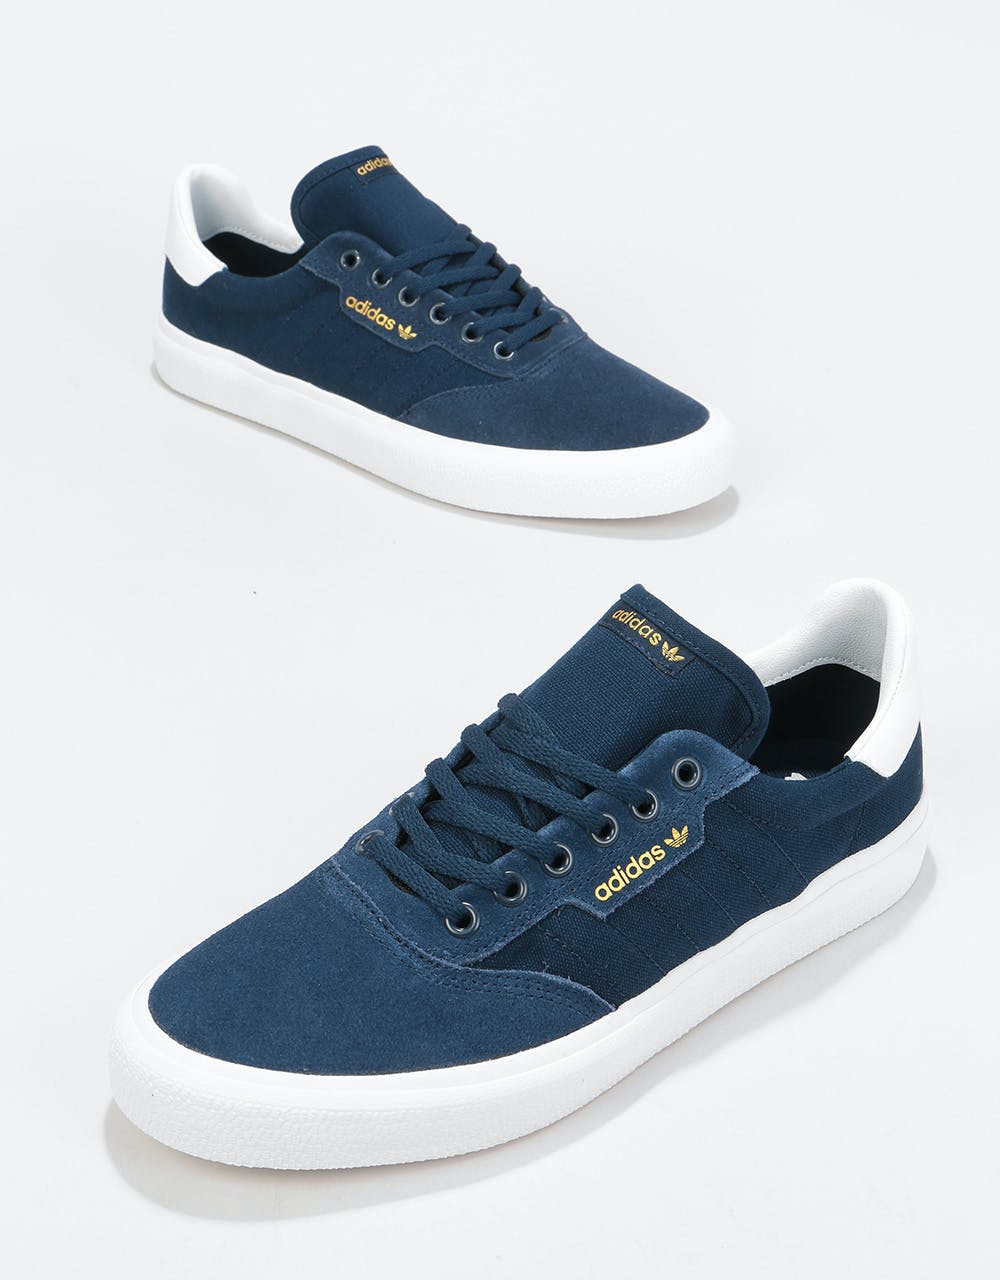 Adidas 3MC Skate Shoes - Collegiate Navy/White/Collegiate Navy